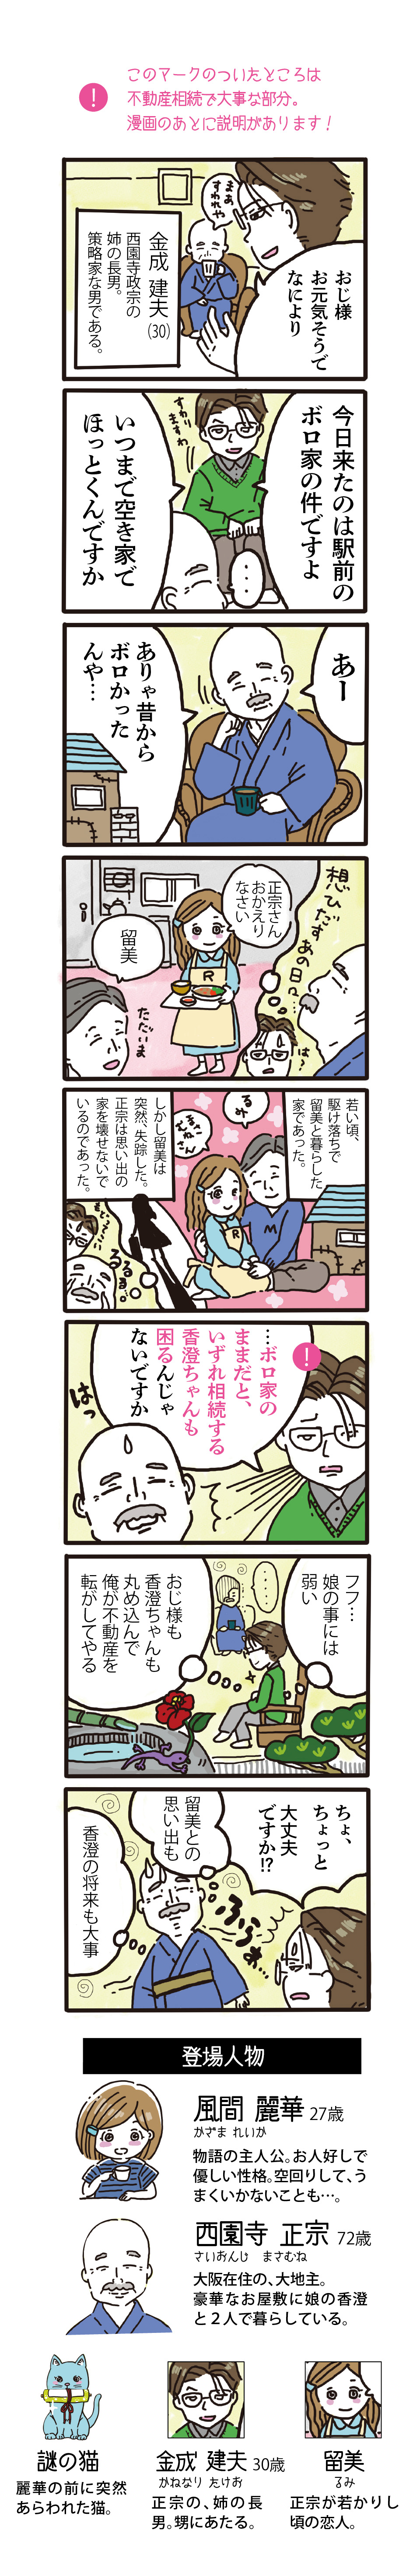 【web漫画】華麗なるSOUZOKU  #4